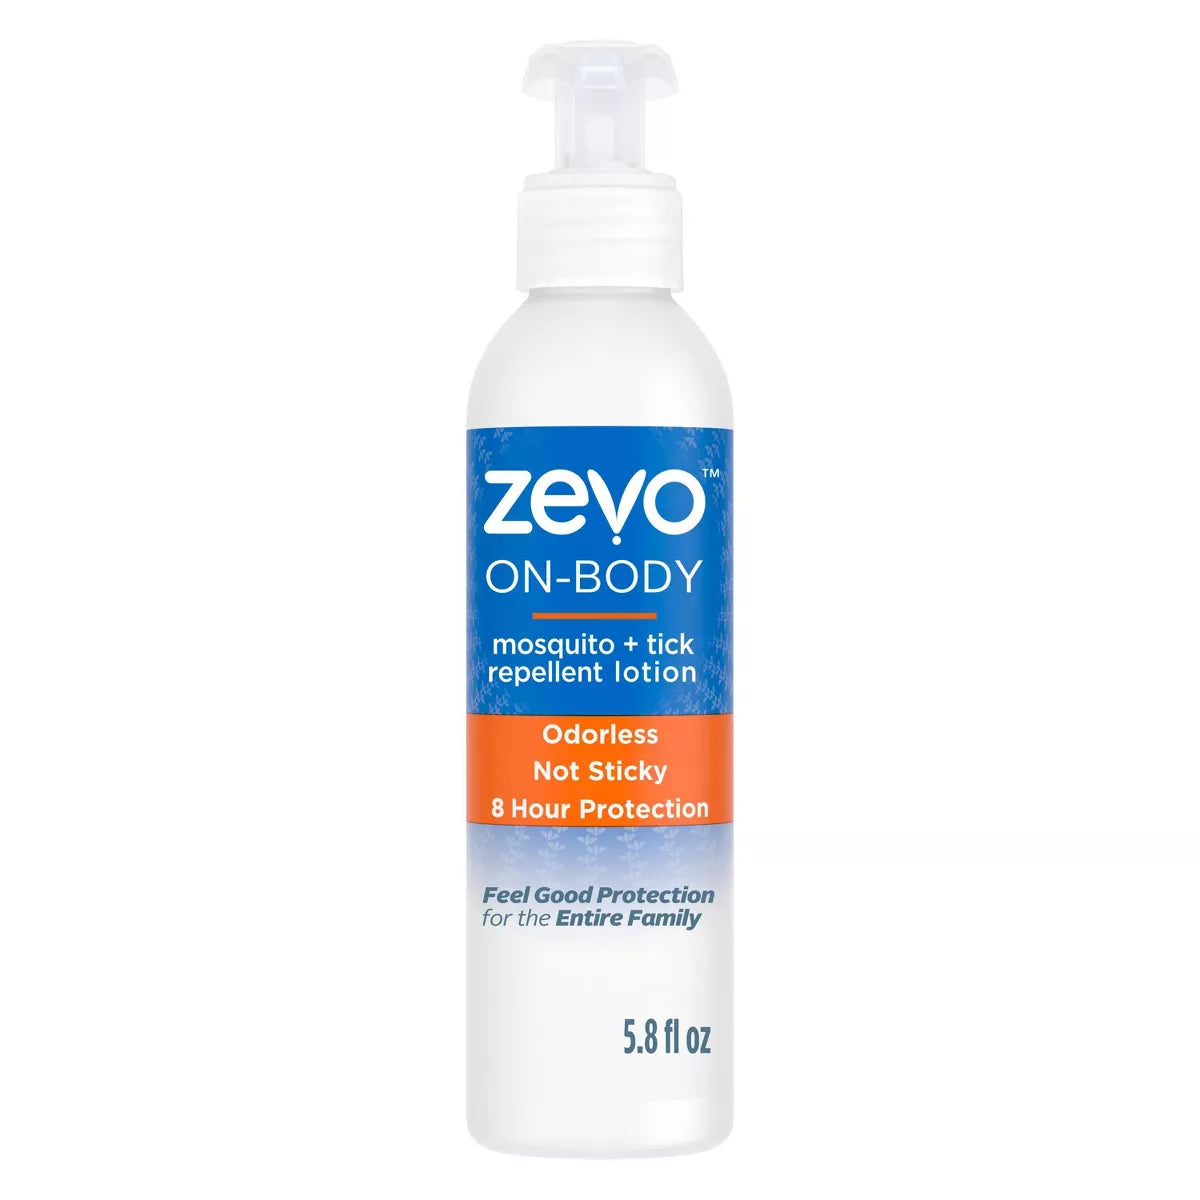 Zevo On-Body Mosquito and Tick Repellent Lotion – 5.8oz